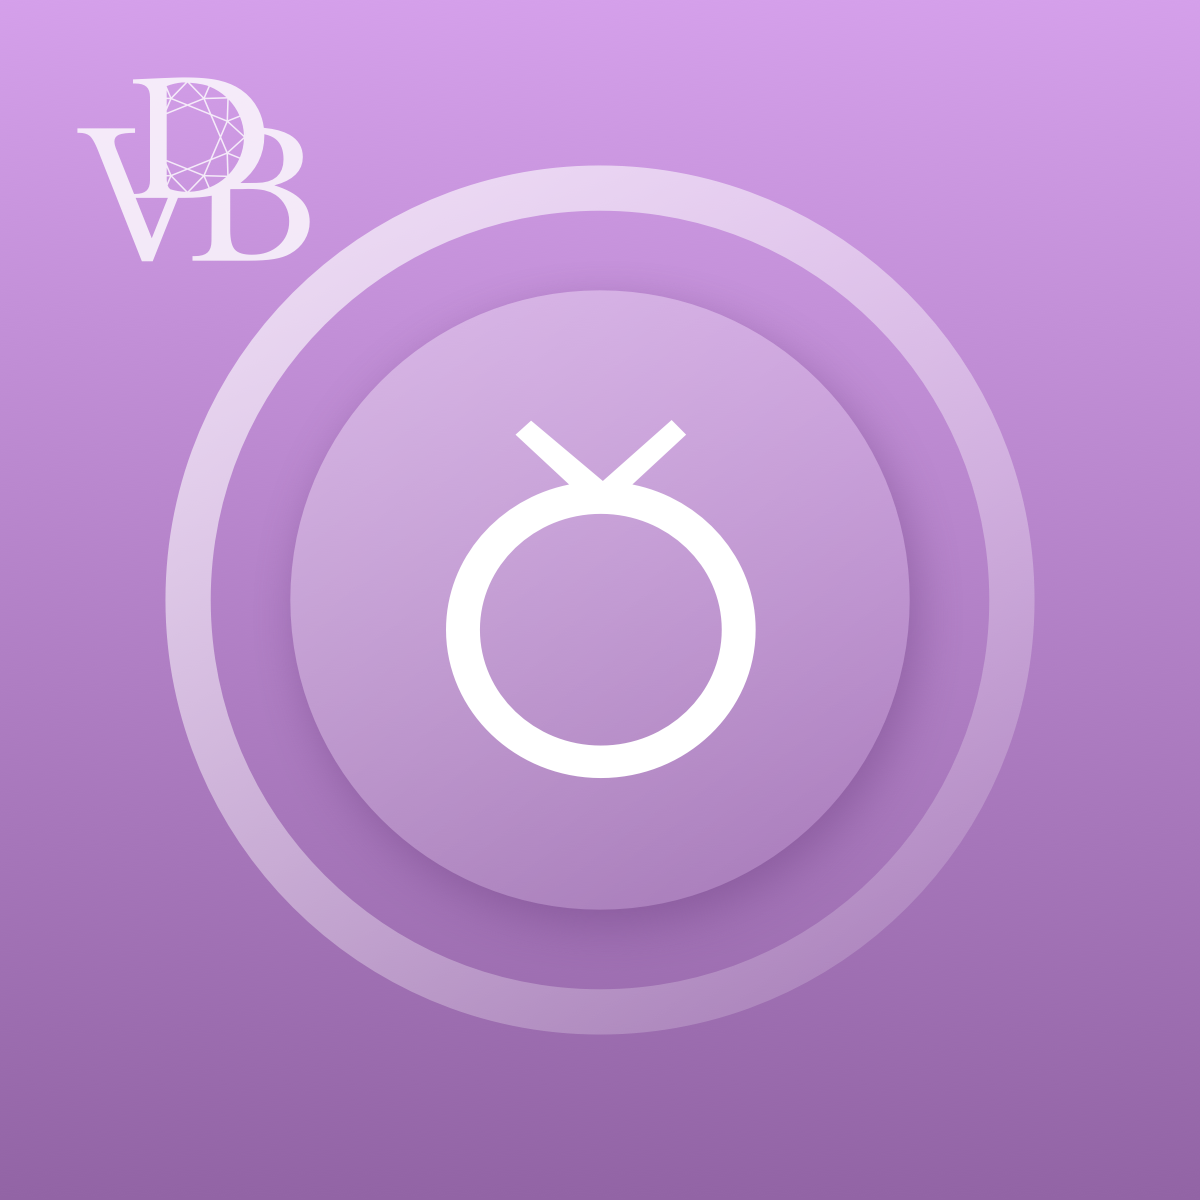 VDB Ring Creator Shopify App